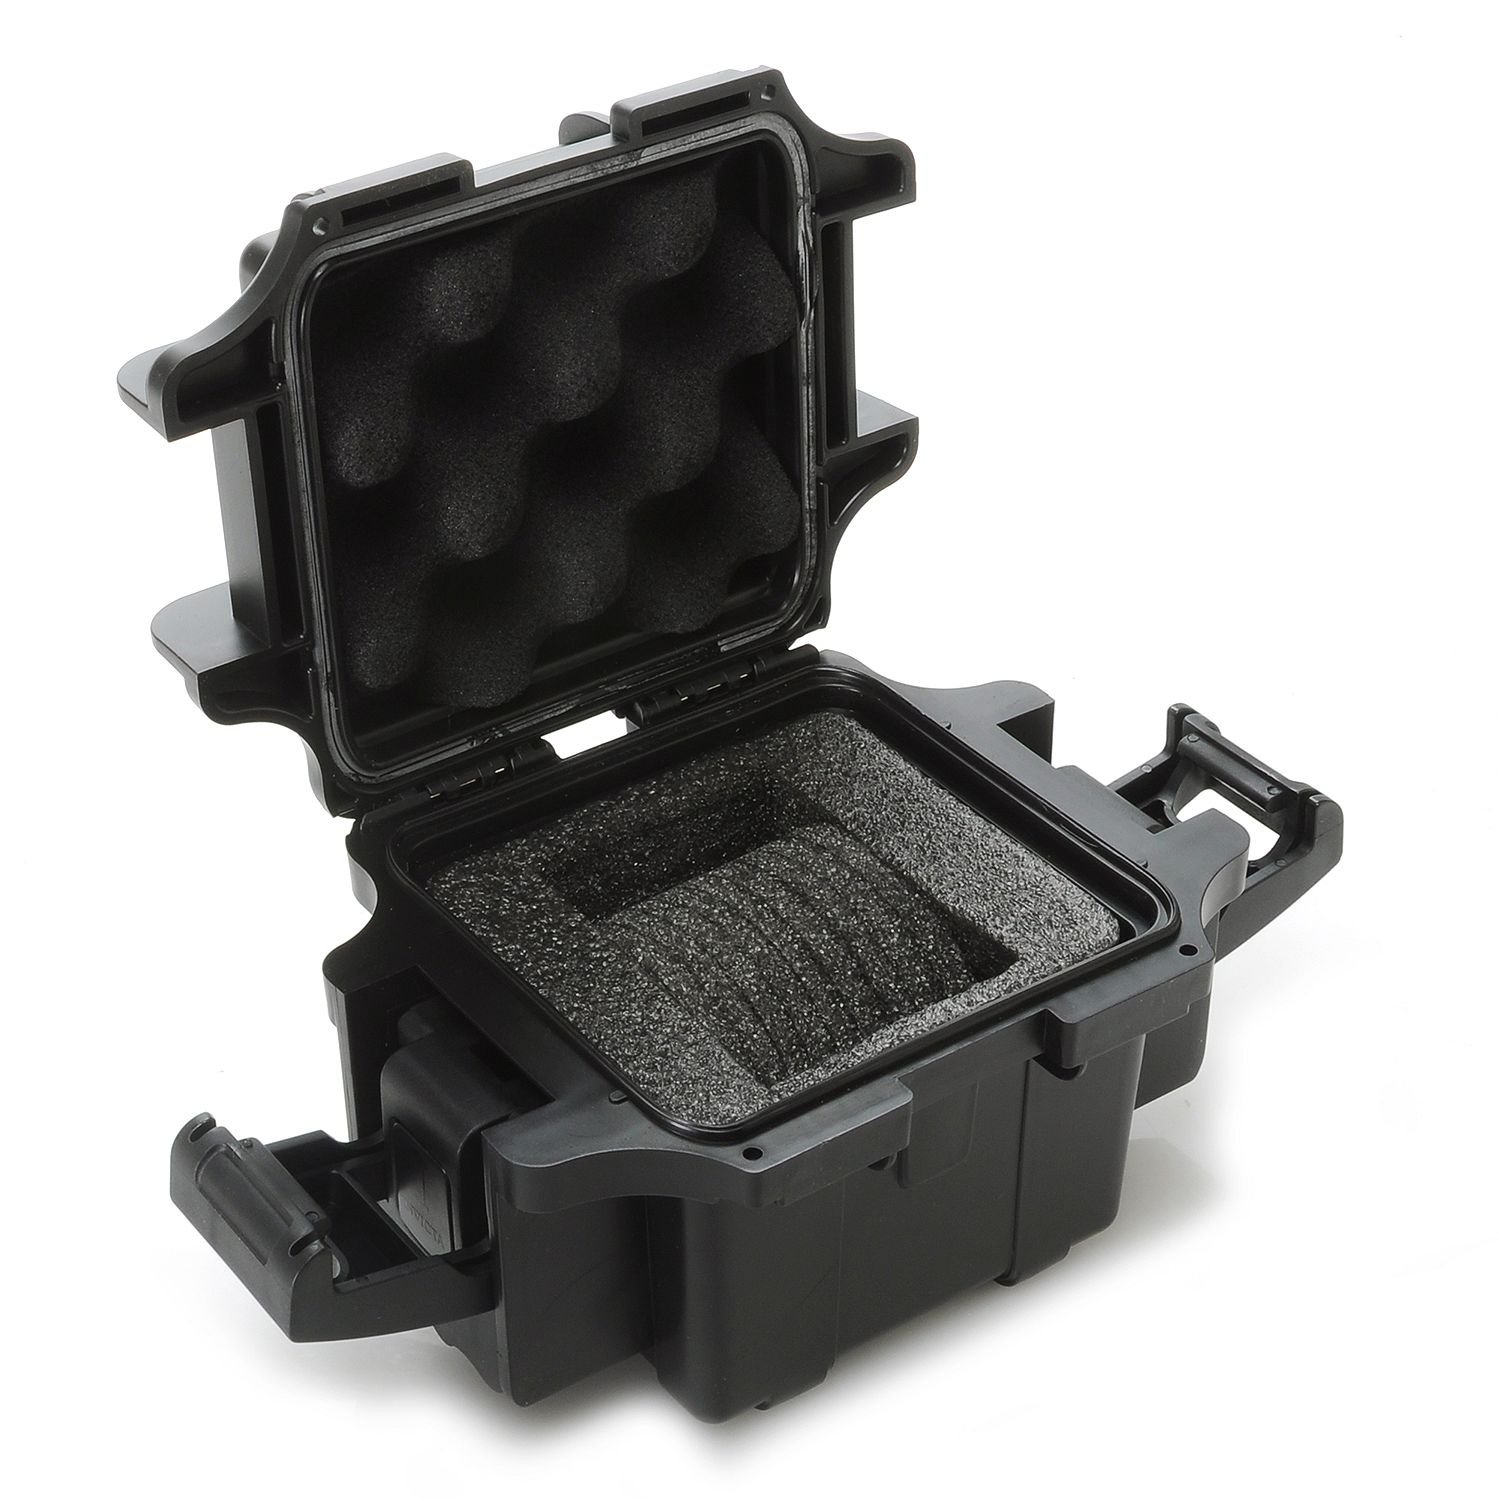 Invicta One (1) Slot Black Waterproof Collector's Dive Case / Watch Box